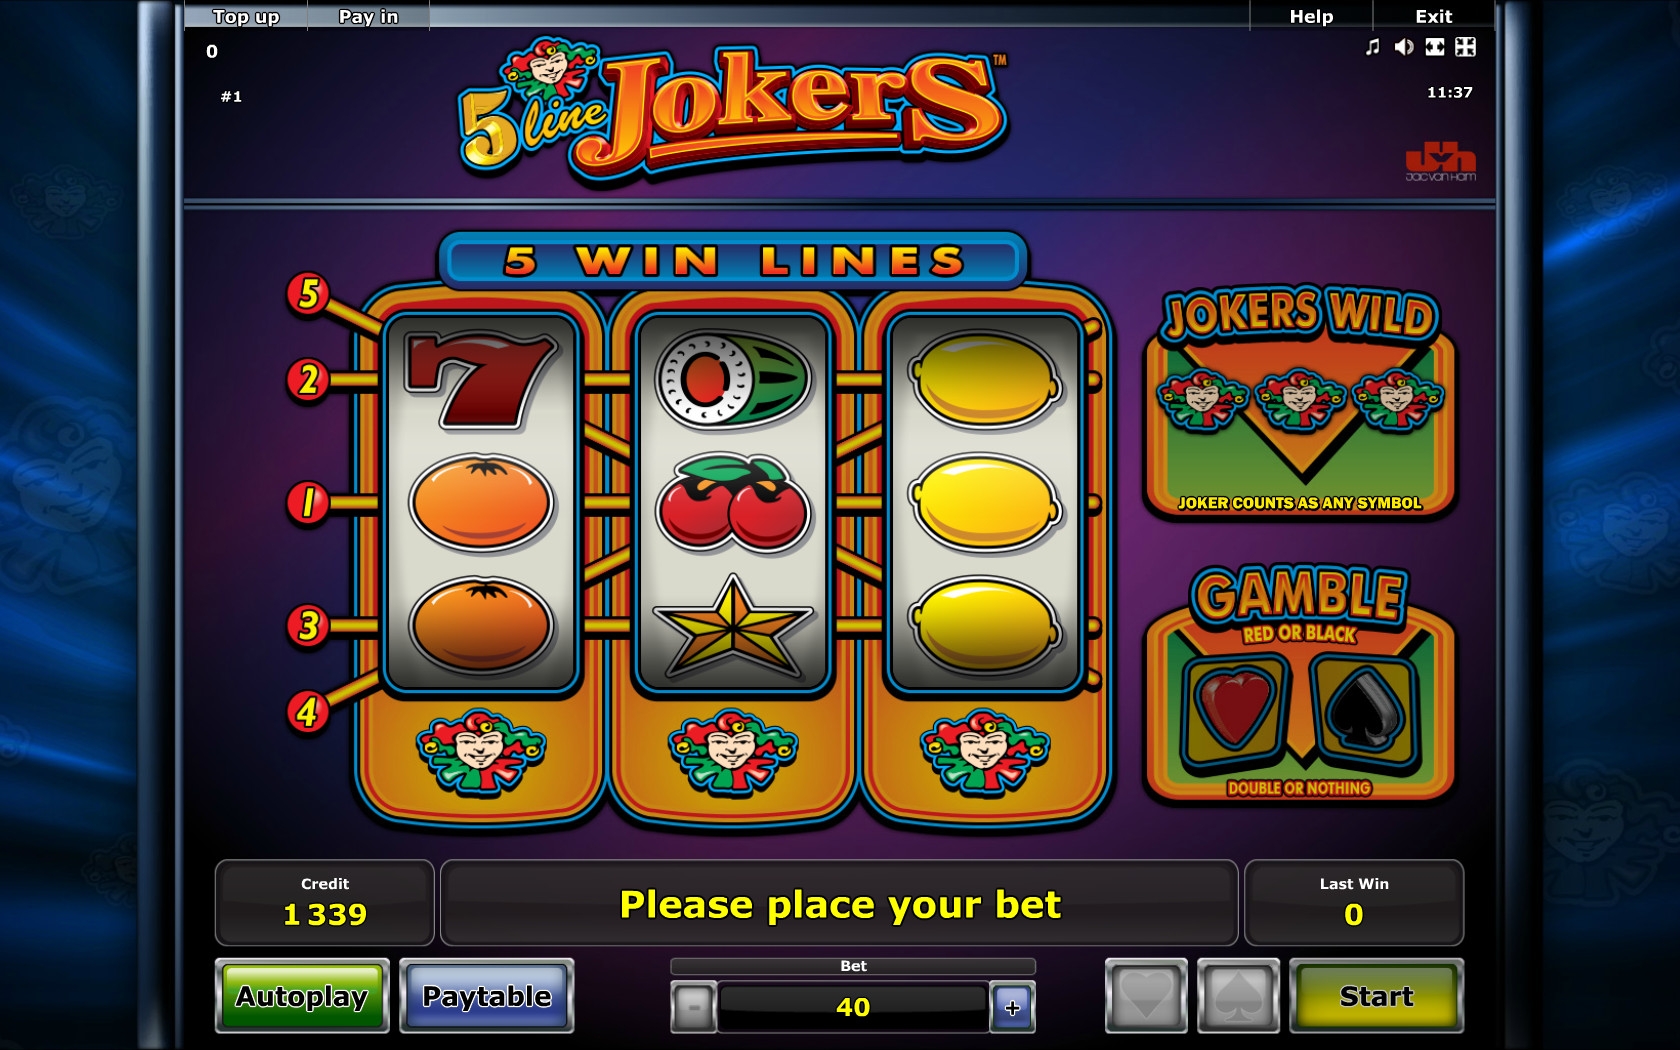 5-Line Jokers (5-Line Jokers) from category Slots